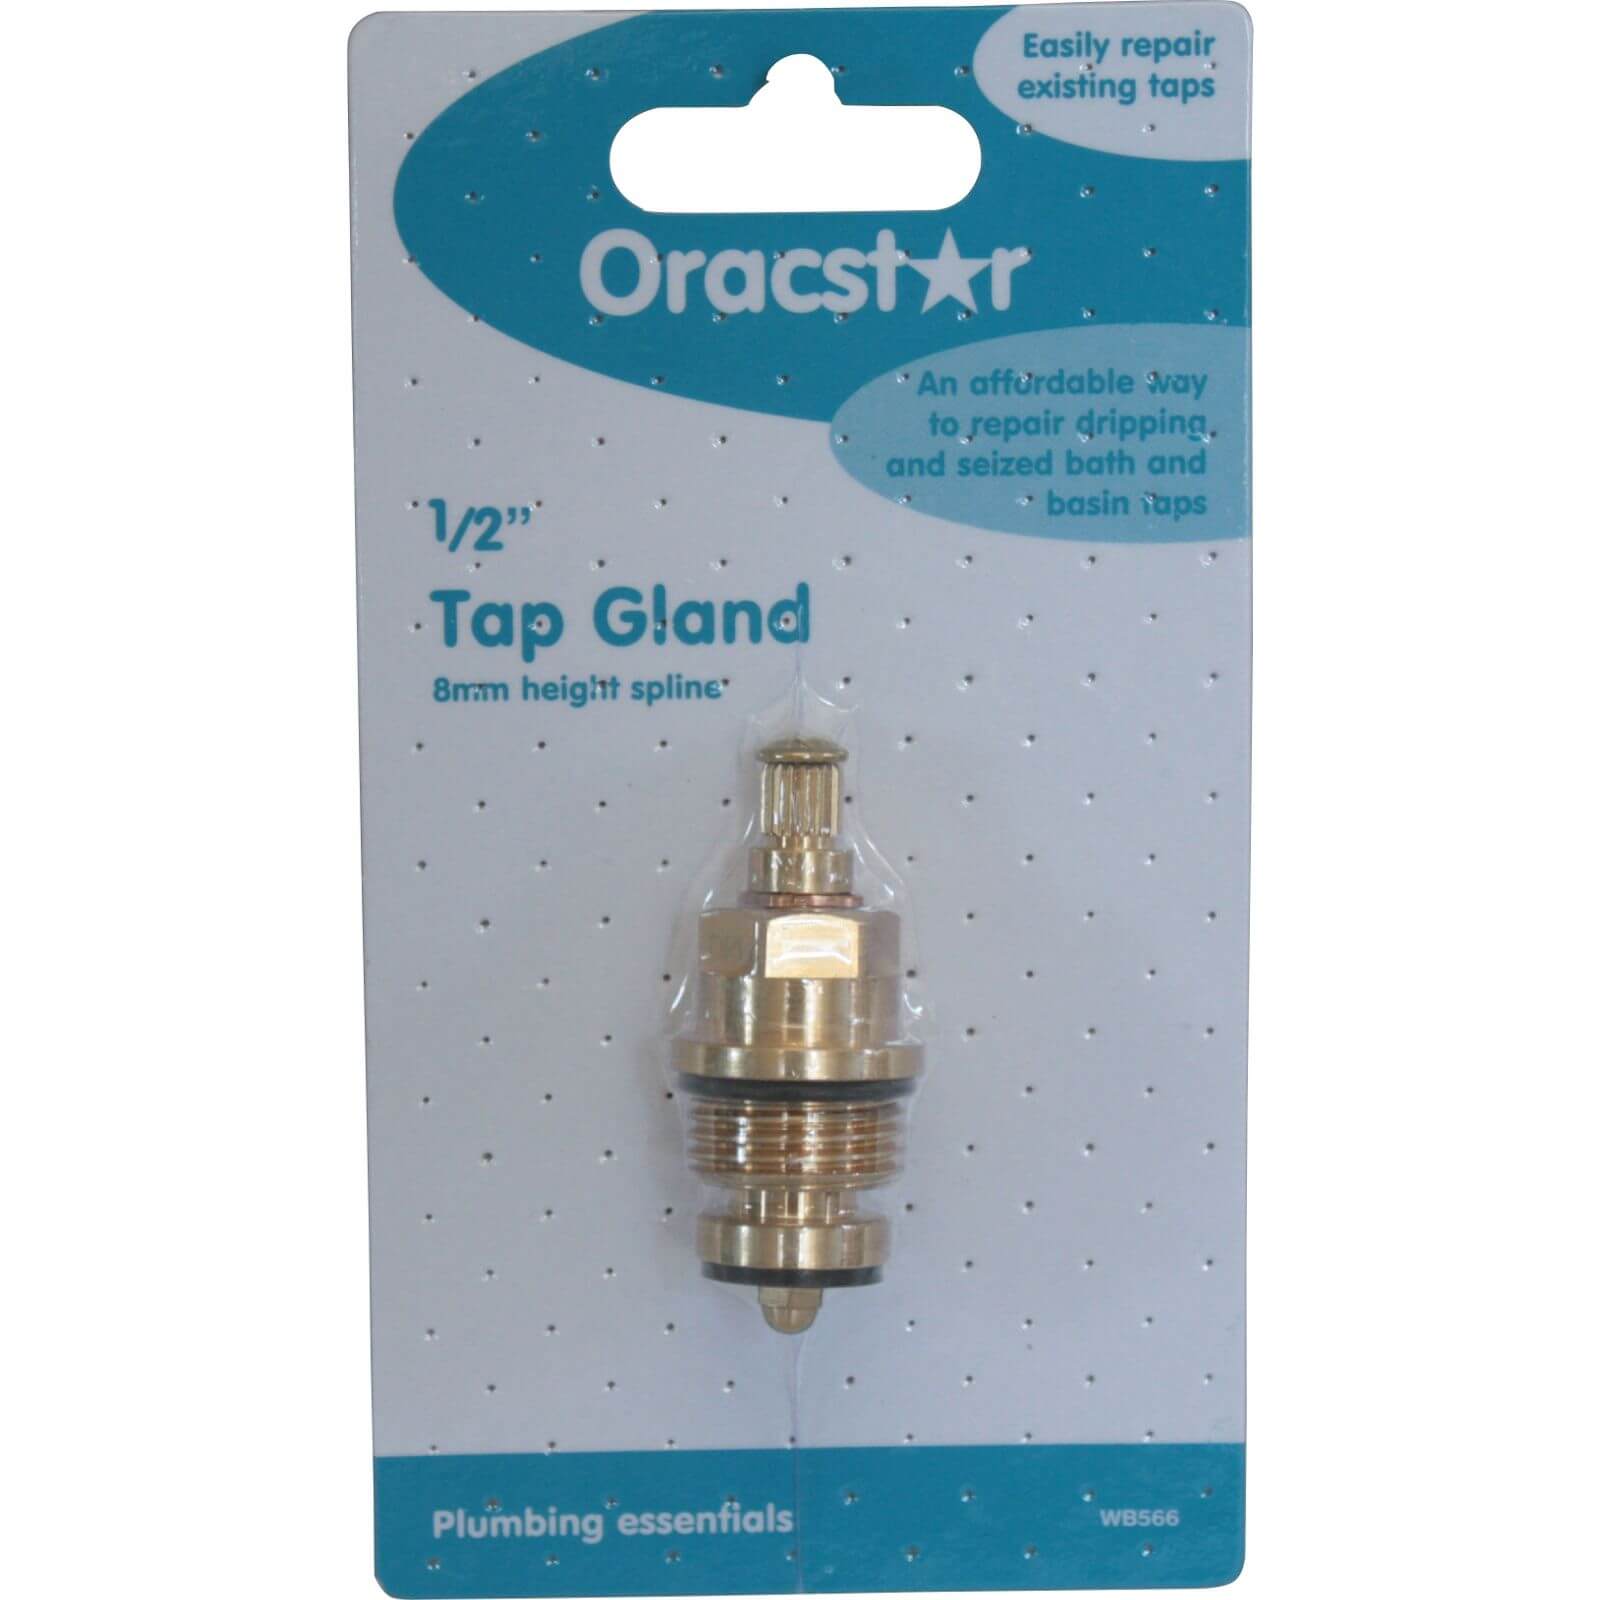 Oracstar 1/2 inch Tap Gland 8mm Height Spline